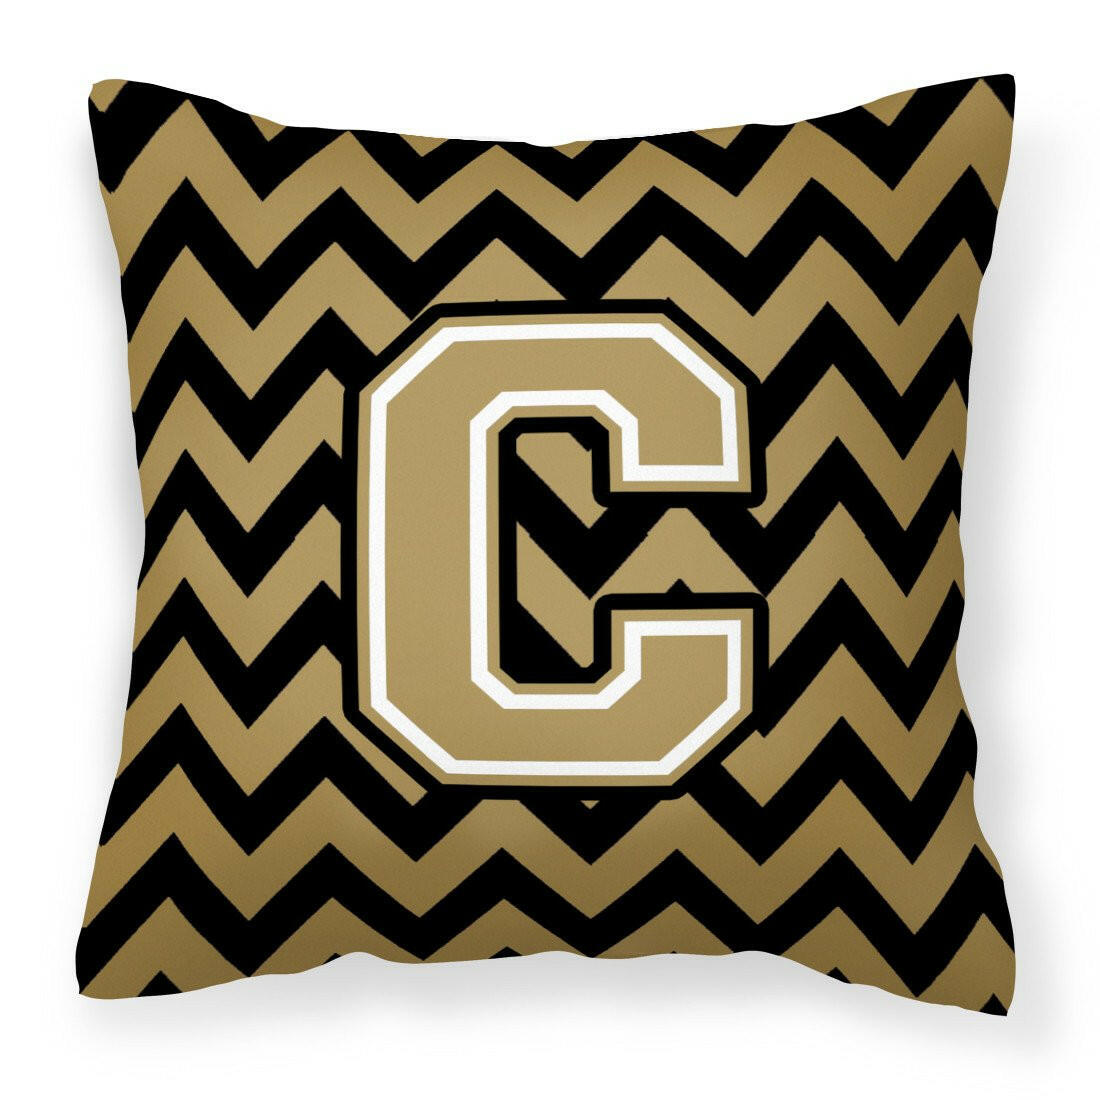 Letter C Chevron Black and Gold  Fabric Decorative Pillow CJ1050-CPW1414 by Caroline's Treasures